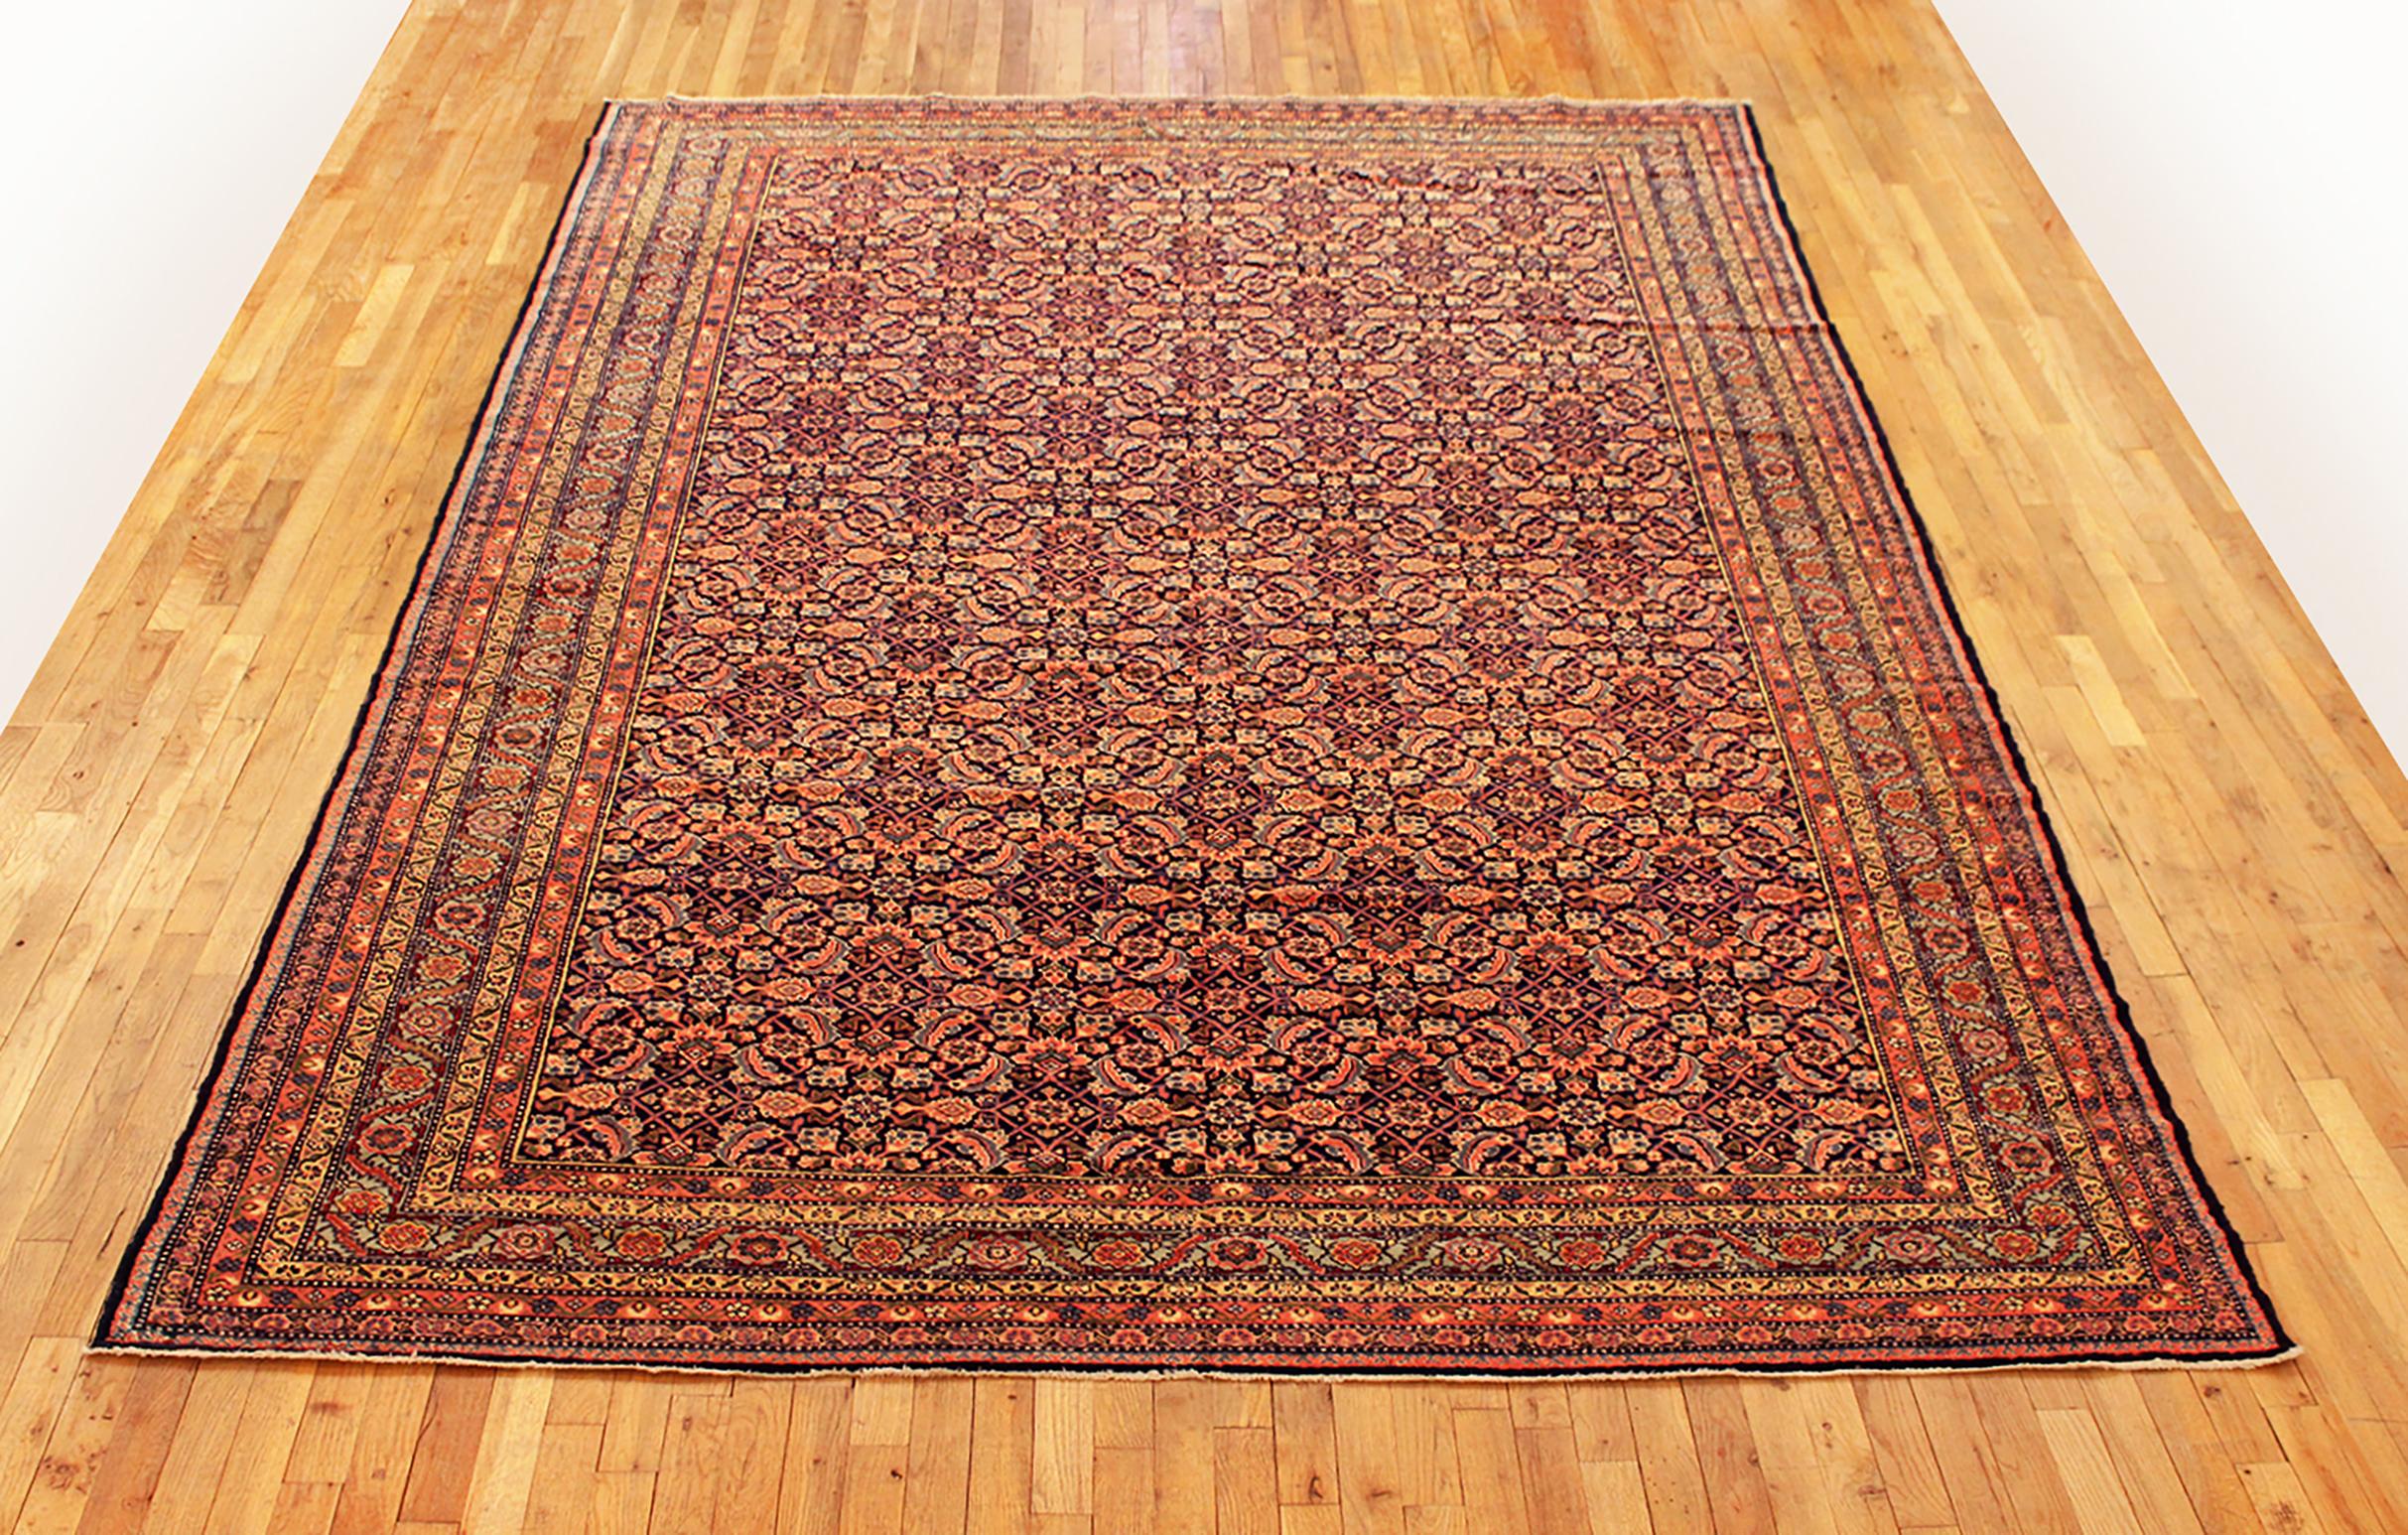 Antique Perisan Tabriz Oriental carpet, circa 1920, Room Sized

An antique Persian Tabriz oriental carpet, circa 1920. Size: 11'1